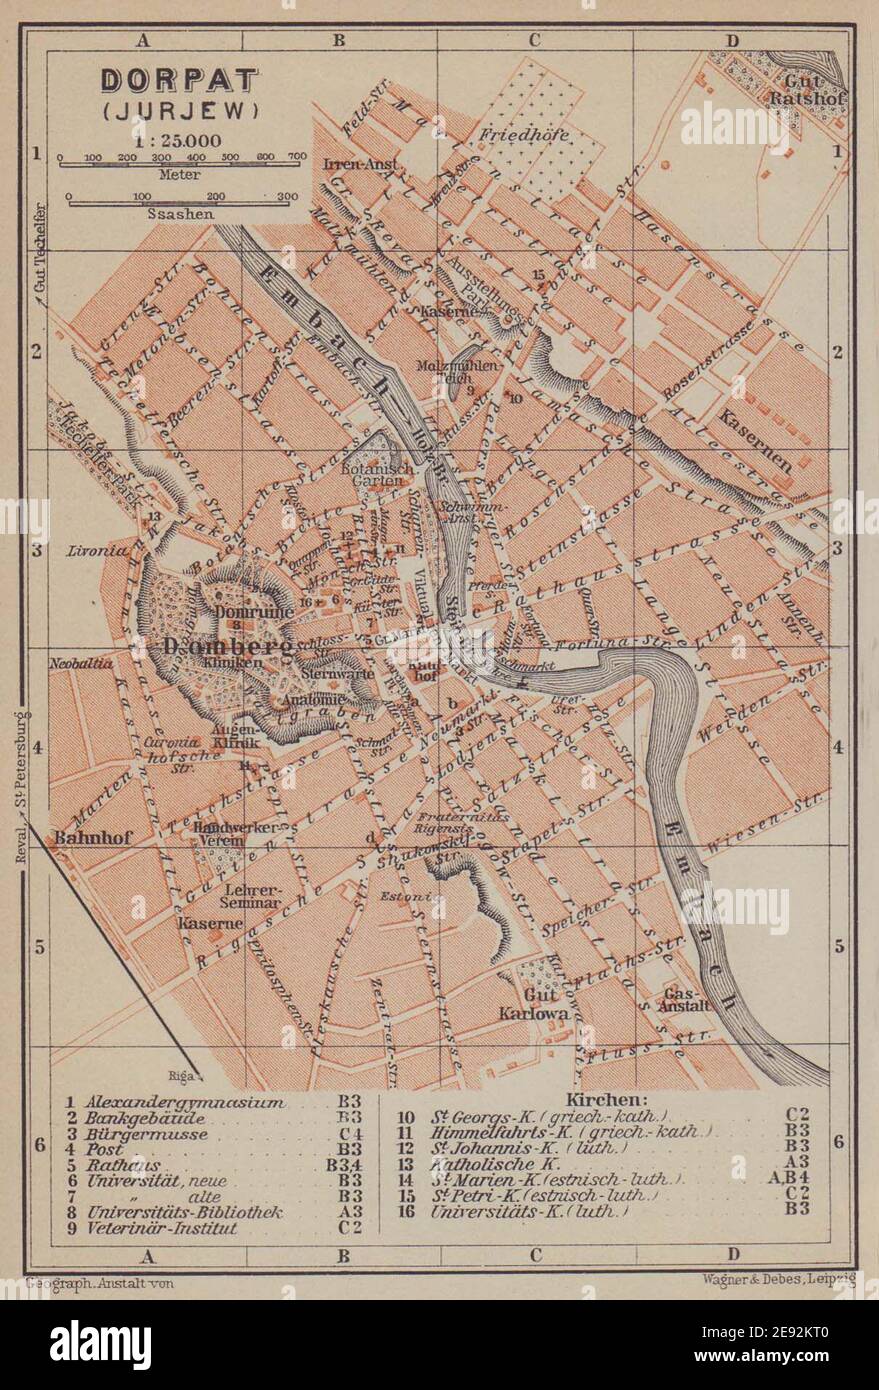 Tartu town/city plan linna kaart kava. Estonia. Dorpat/Jurjew. BAEDEKER 1914 map Stock Photo